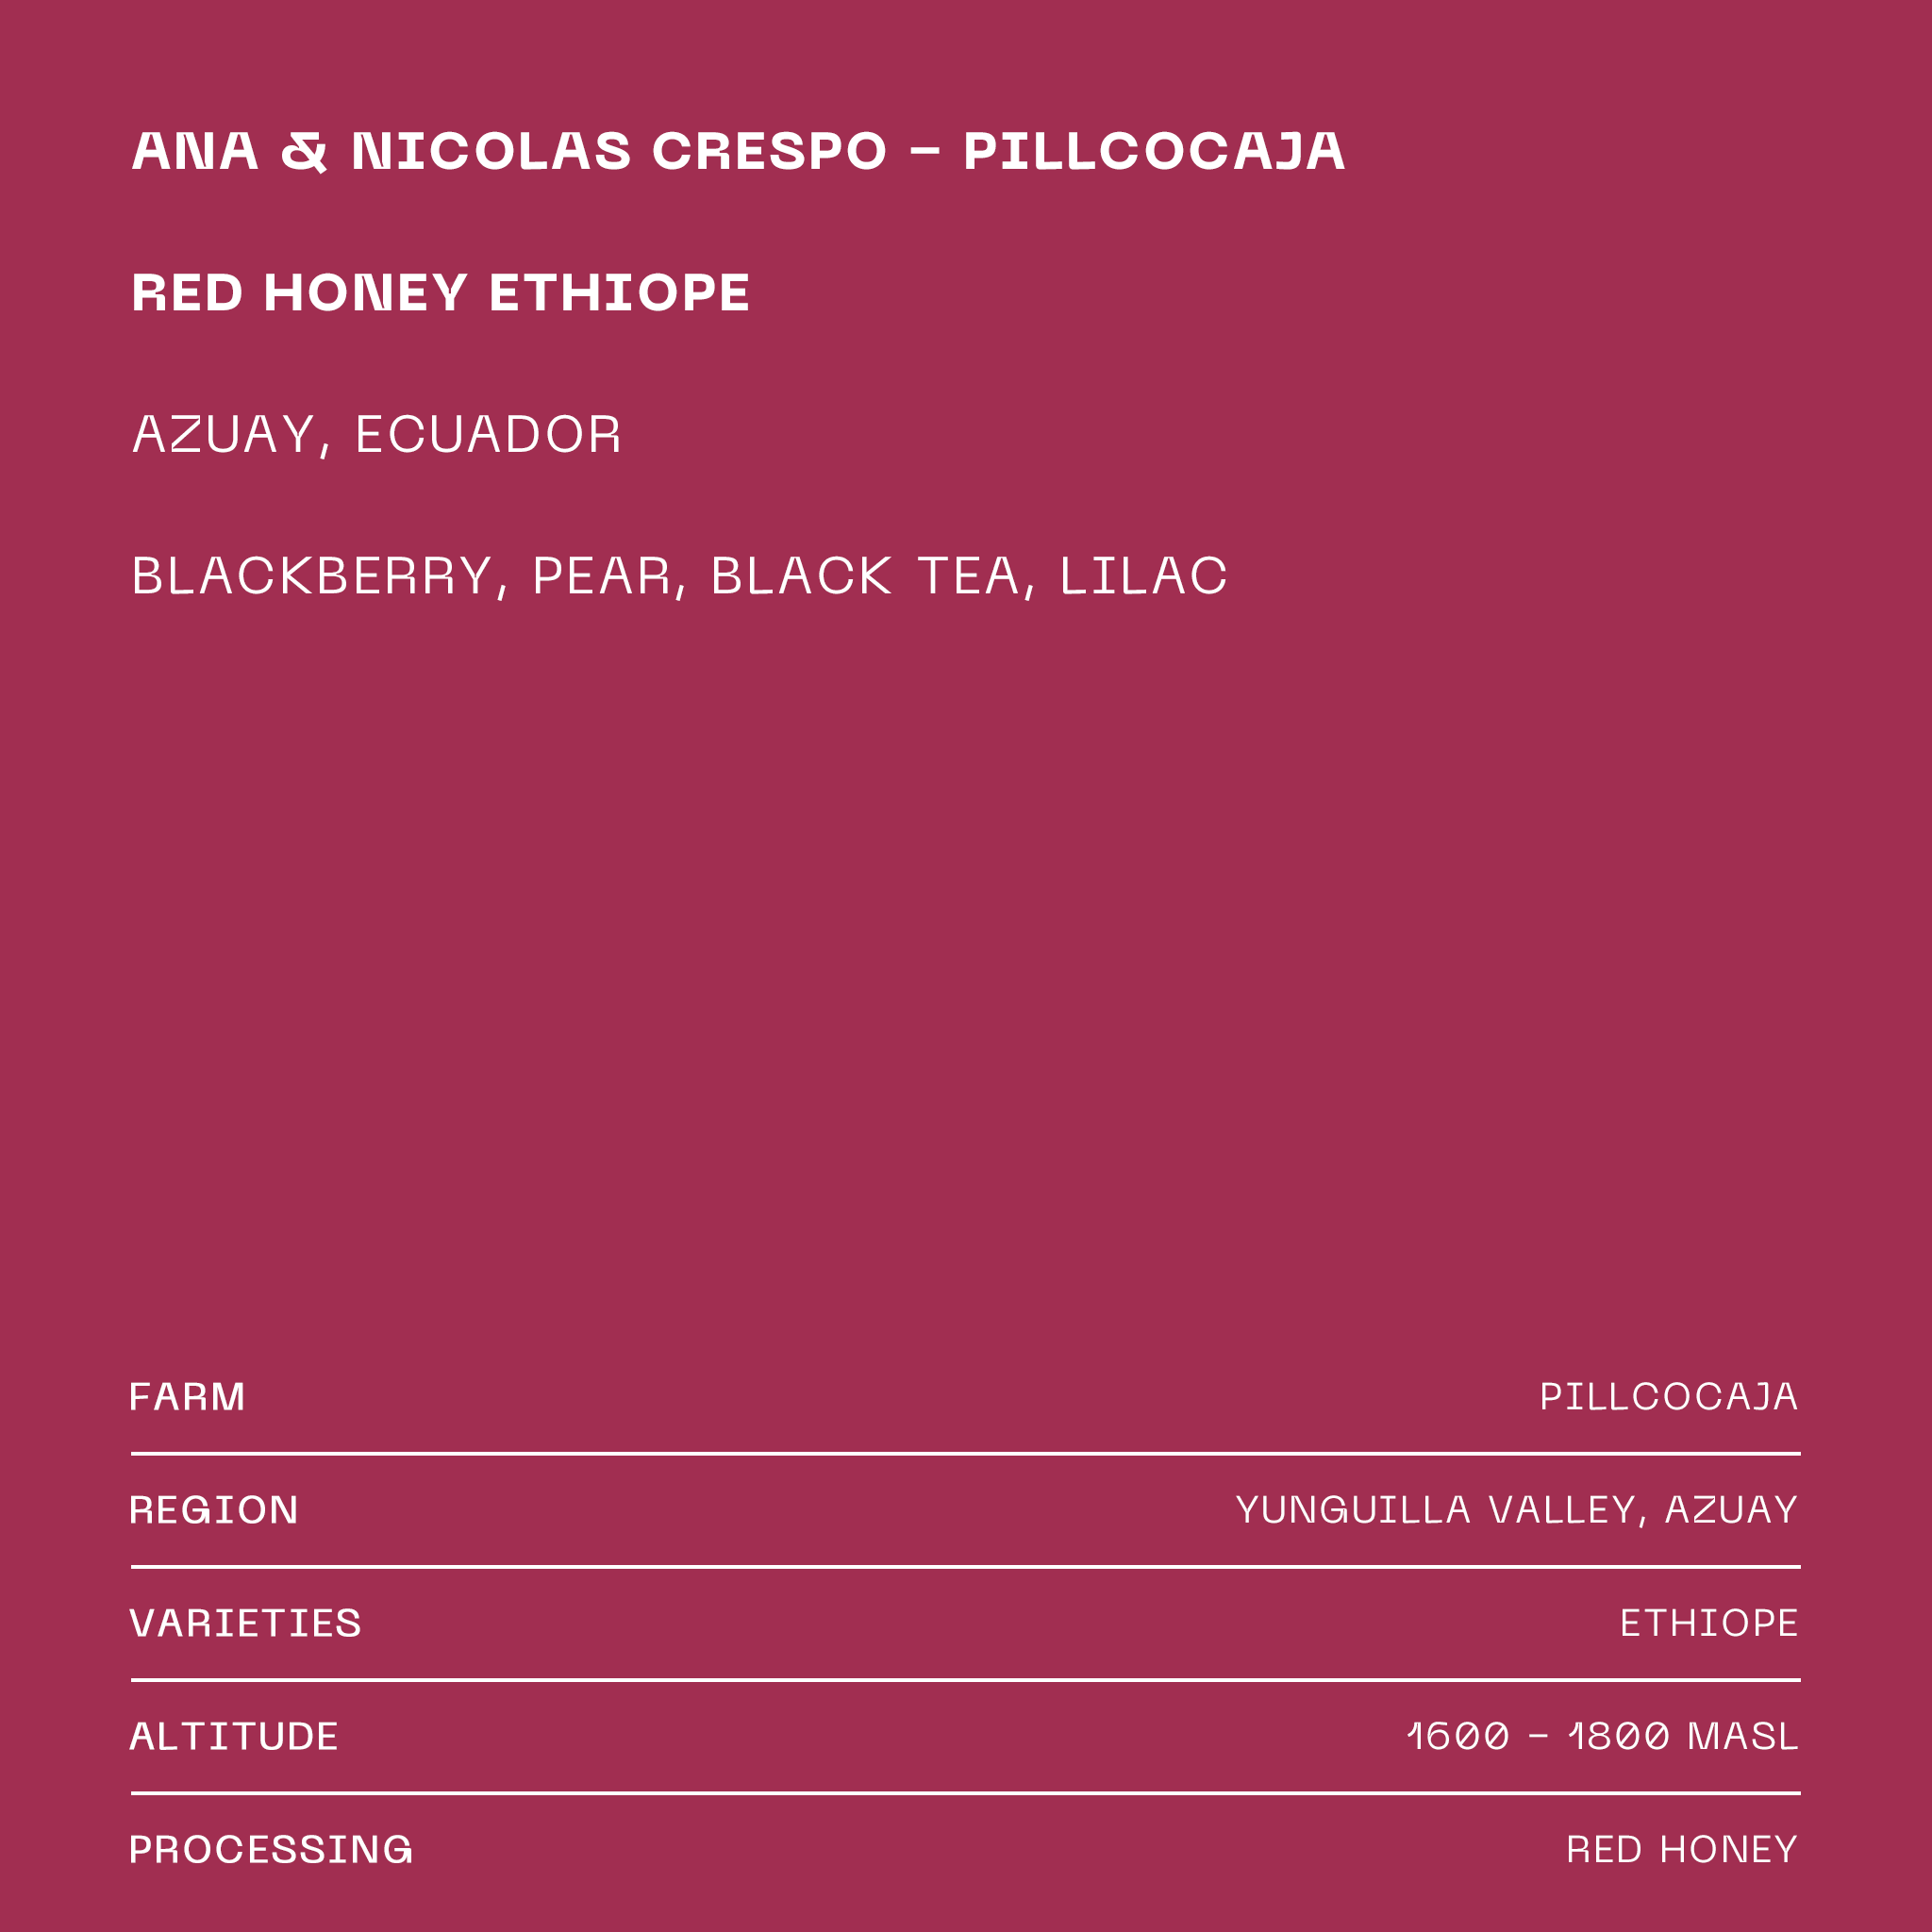 Ana & Nicolas Crespo 'Pillcocaja' Red Honey Ethiope